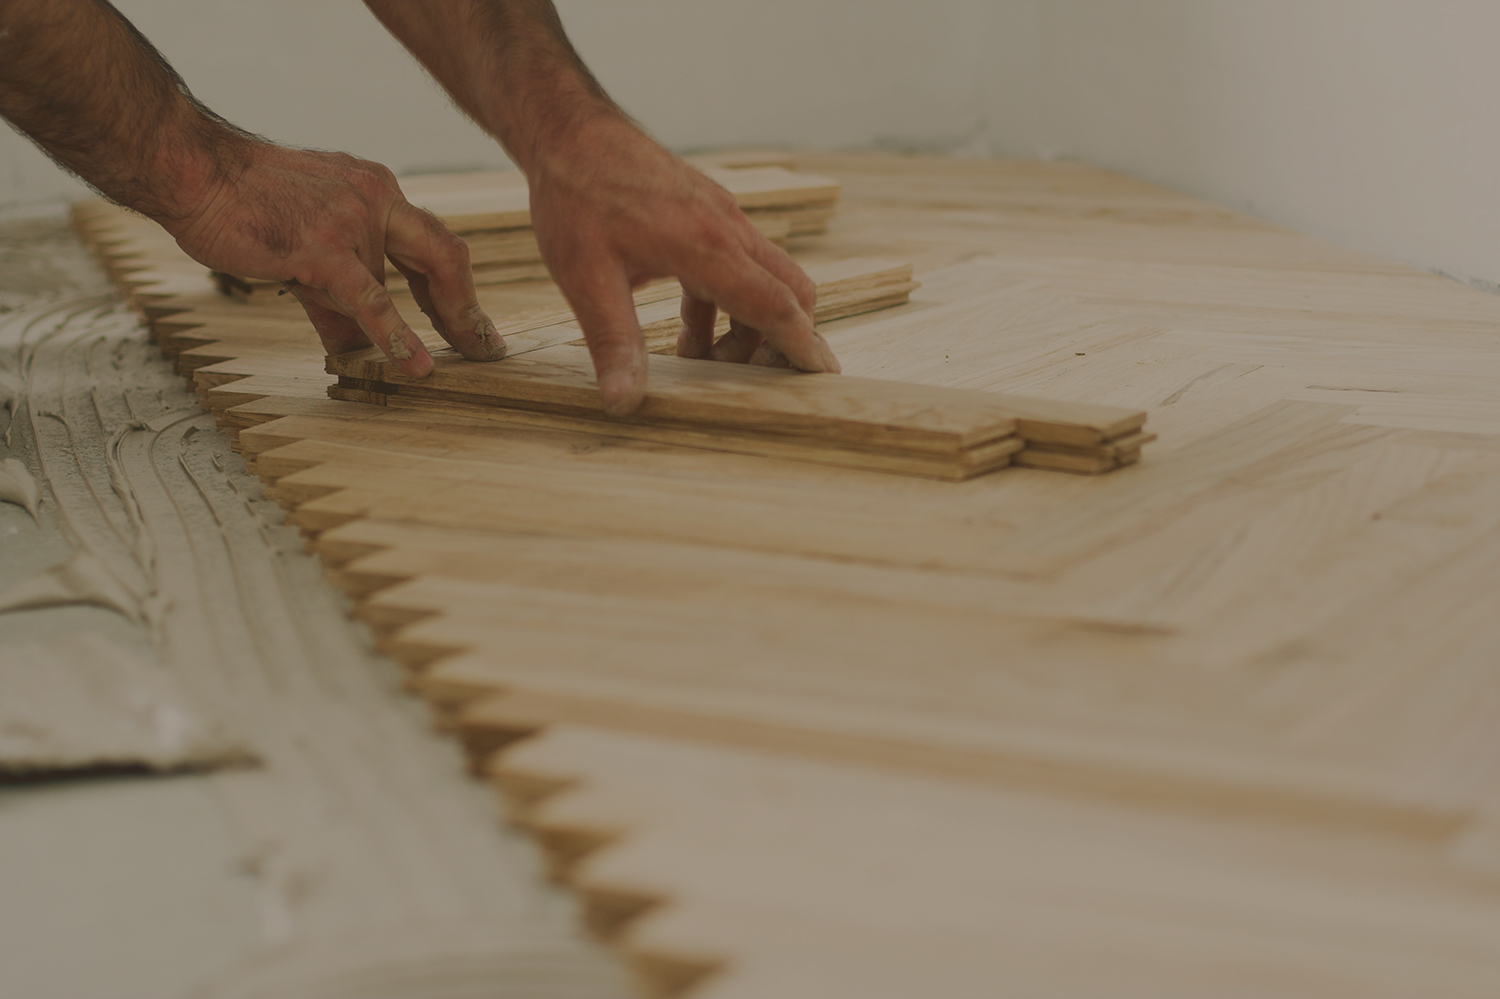 Hardwood Patterned Design | The Wood Floor Gallery